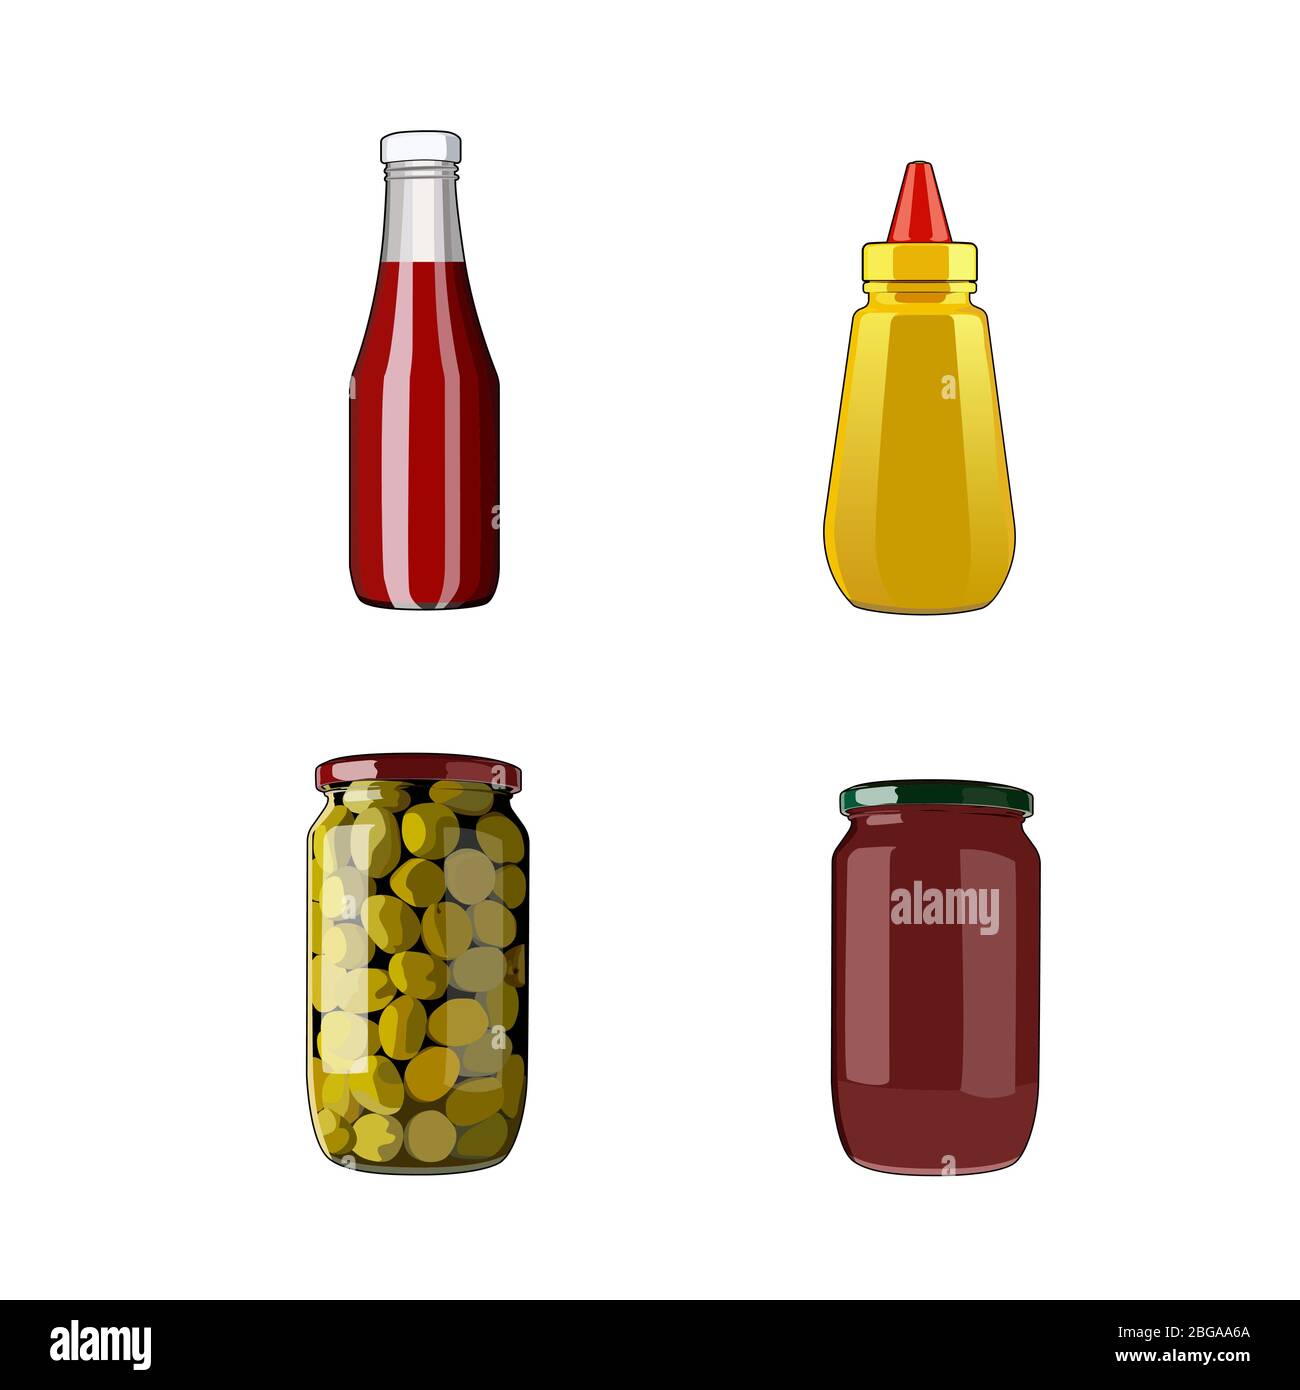 Set mit Würzsauce. Tomatenketchup, Senf, Bolognese-Sauce, Oliven im Glas. Zutaten für die Lebensmittel. Vektorgrafik Illustration Stock Vektor